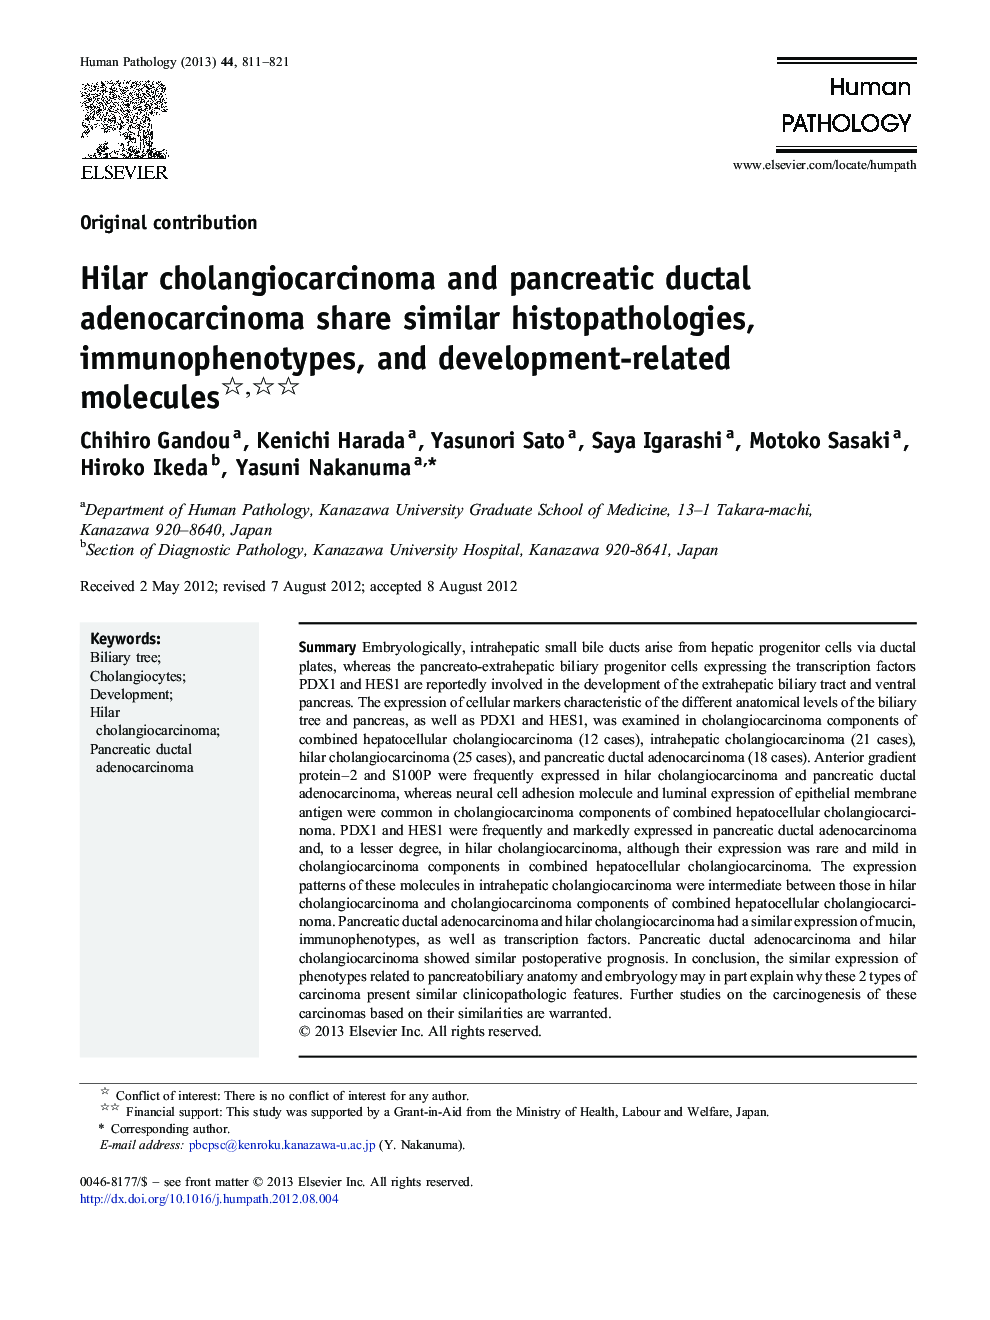 Hilar cholangiocarcinoma and pancreatic ductal adenocarcinoma share similar histopathologies, immunophenotypes, and development-related molecules